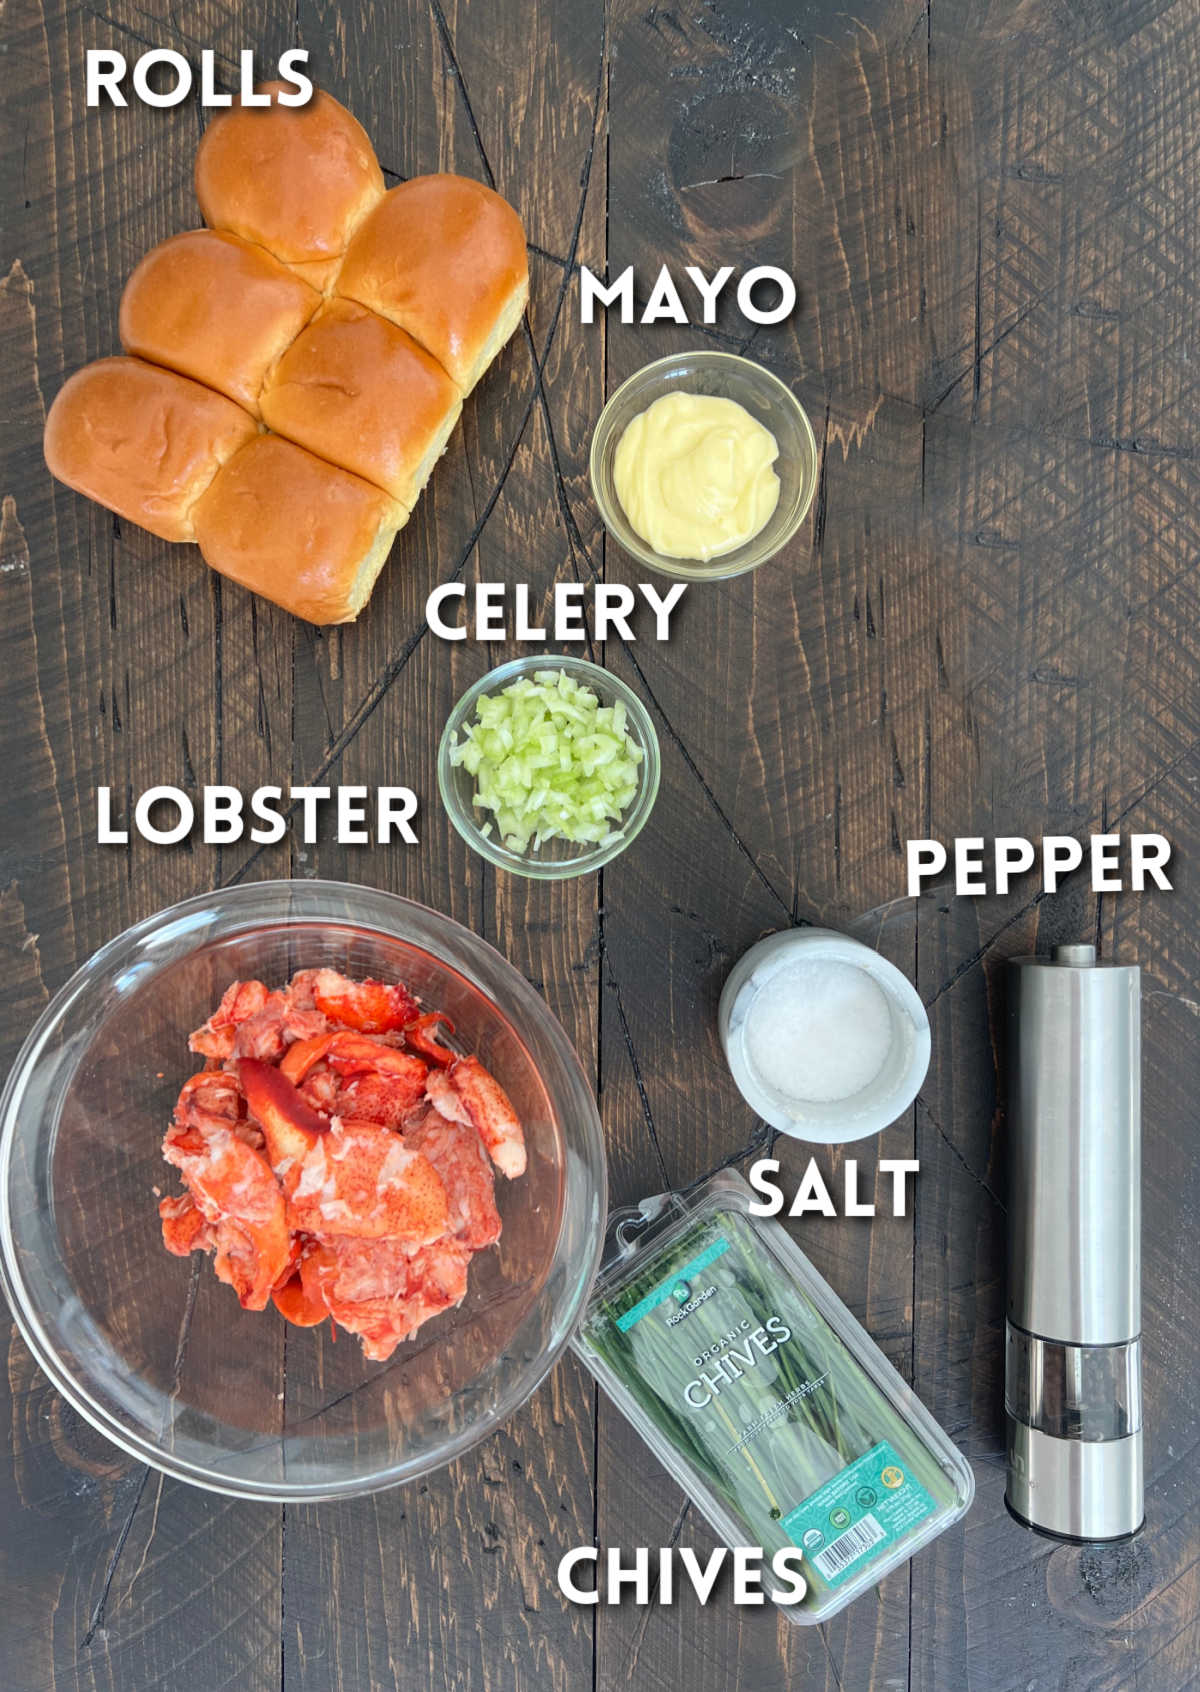 Ingredients for making lobster rolls.